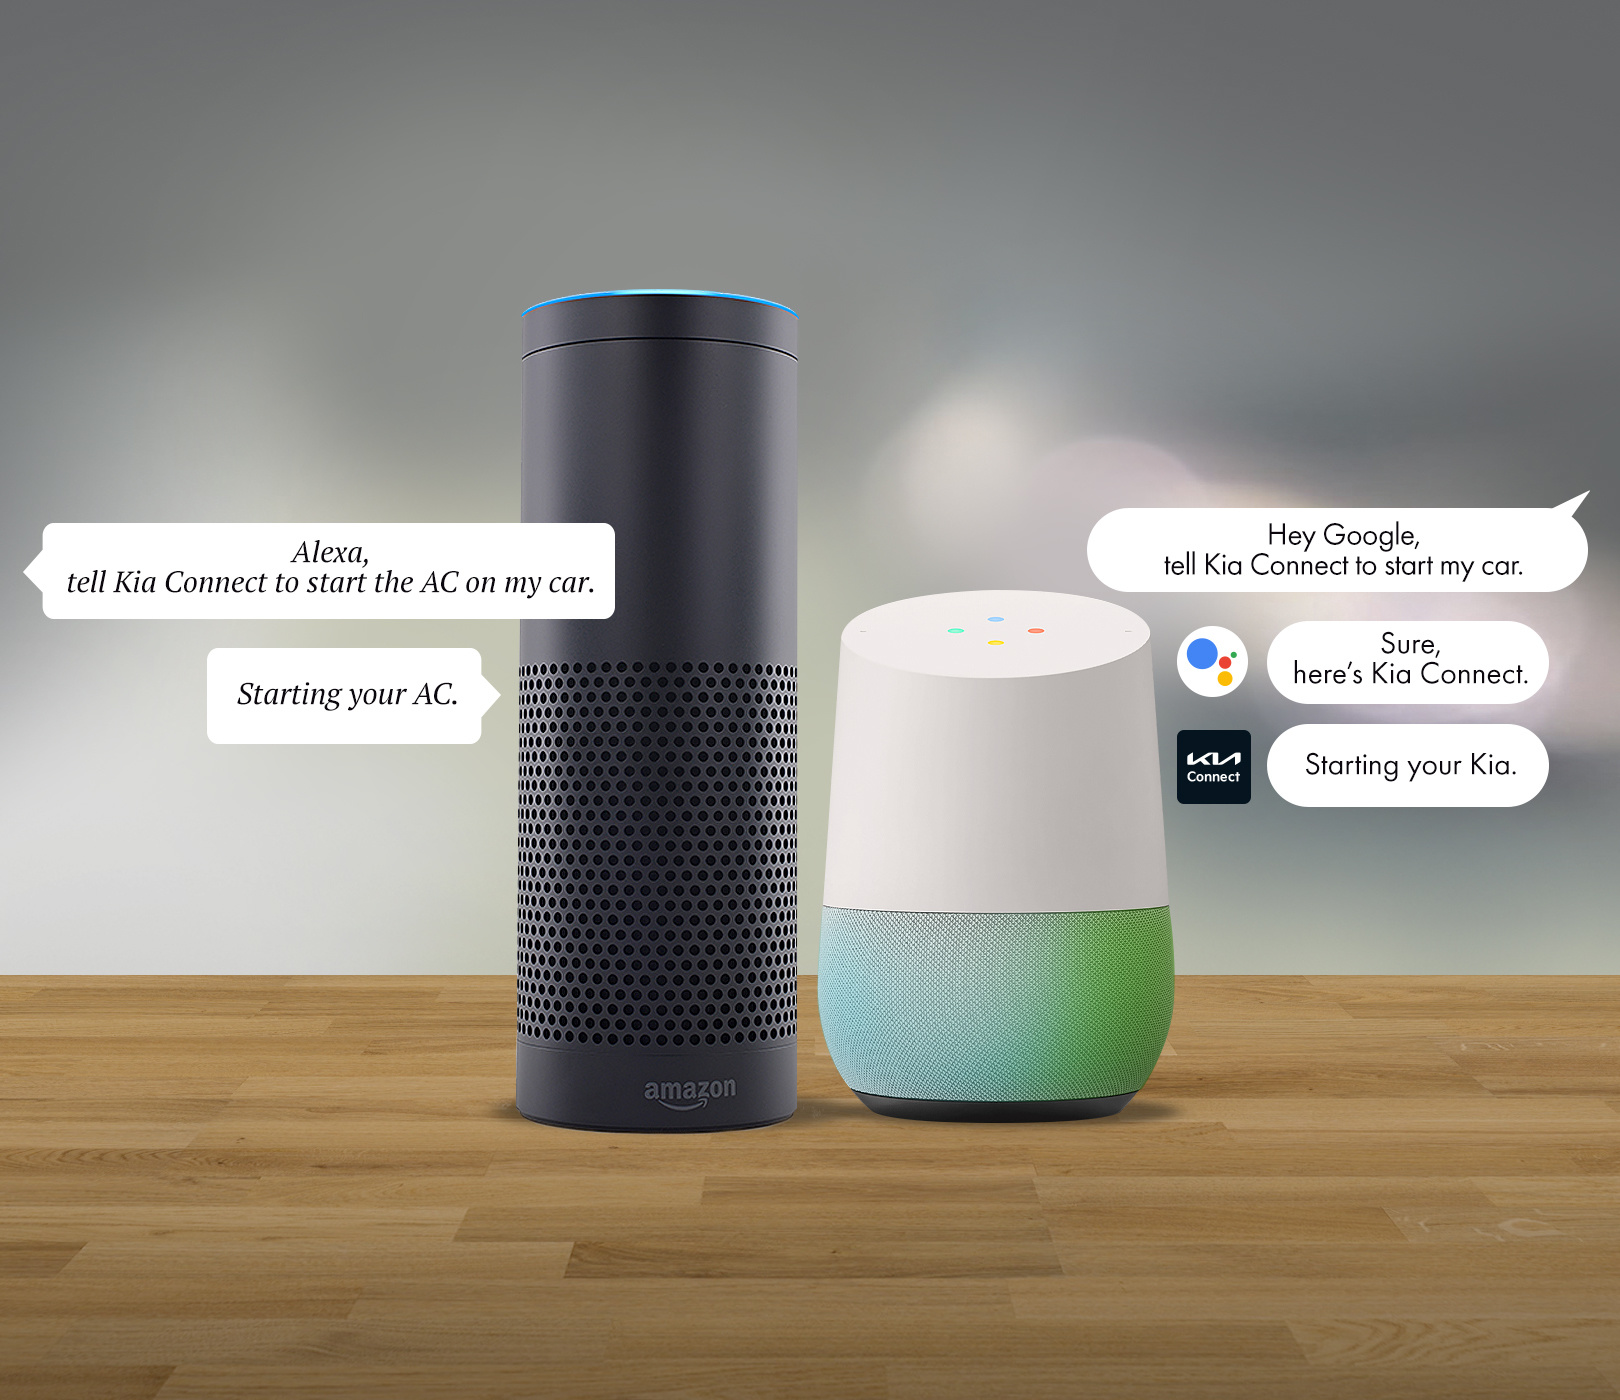 2023 Kia Stinger Google Assistant And Amazon Alexa Functionality With Kia Connect